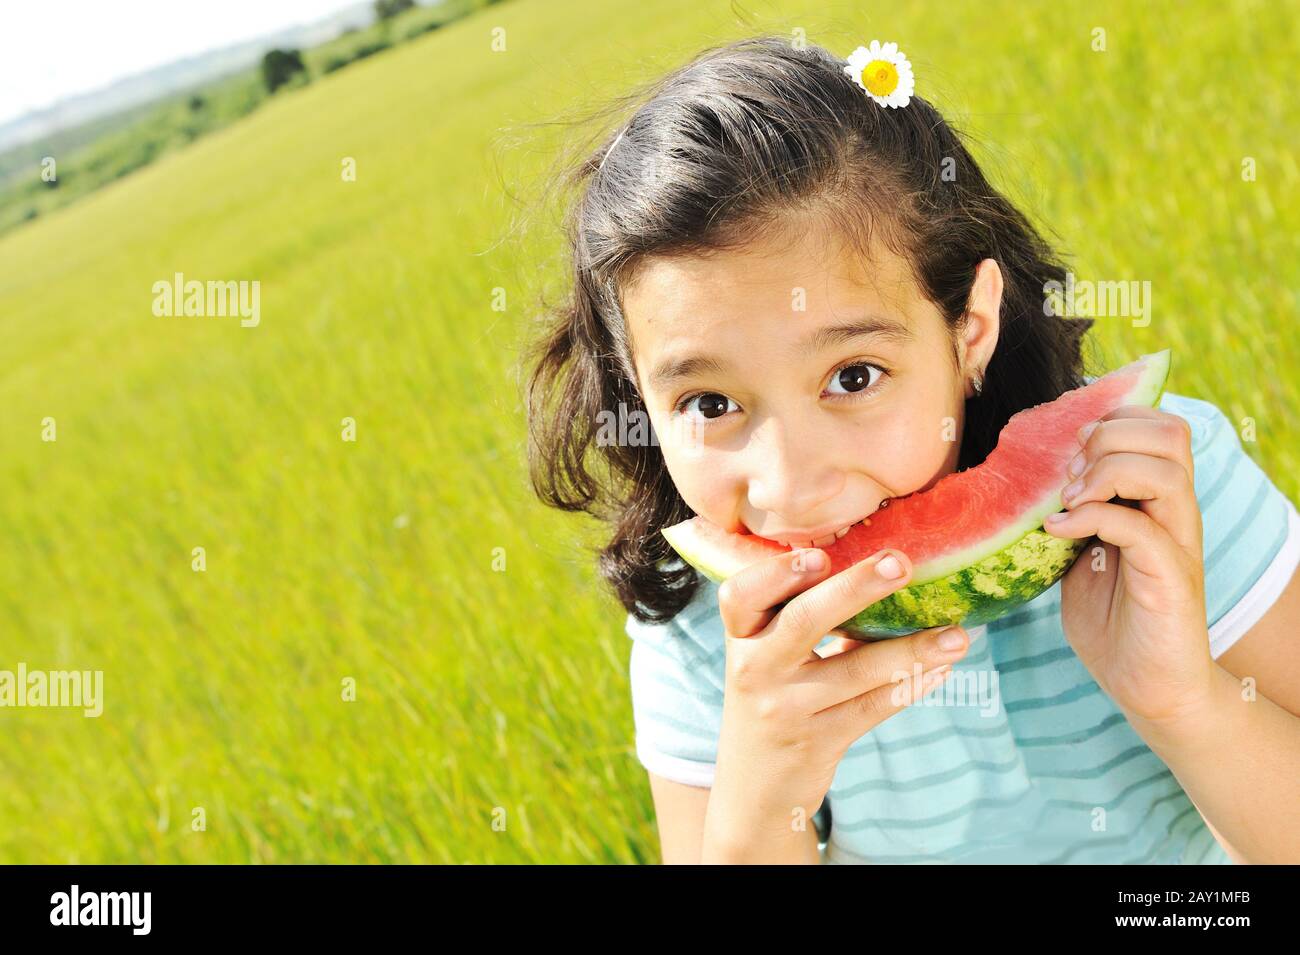 Eating watermelon outside Stock Photo